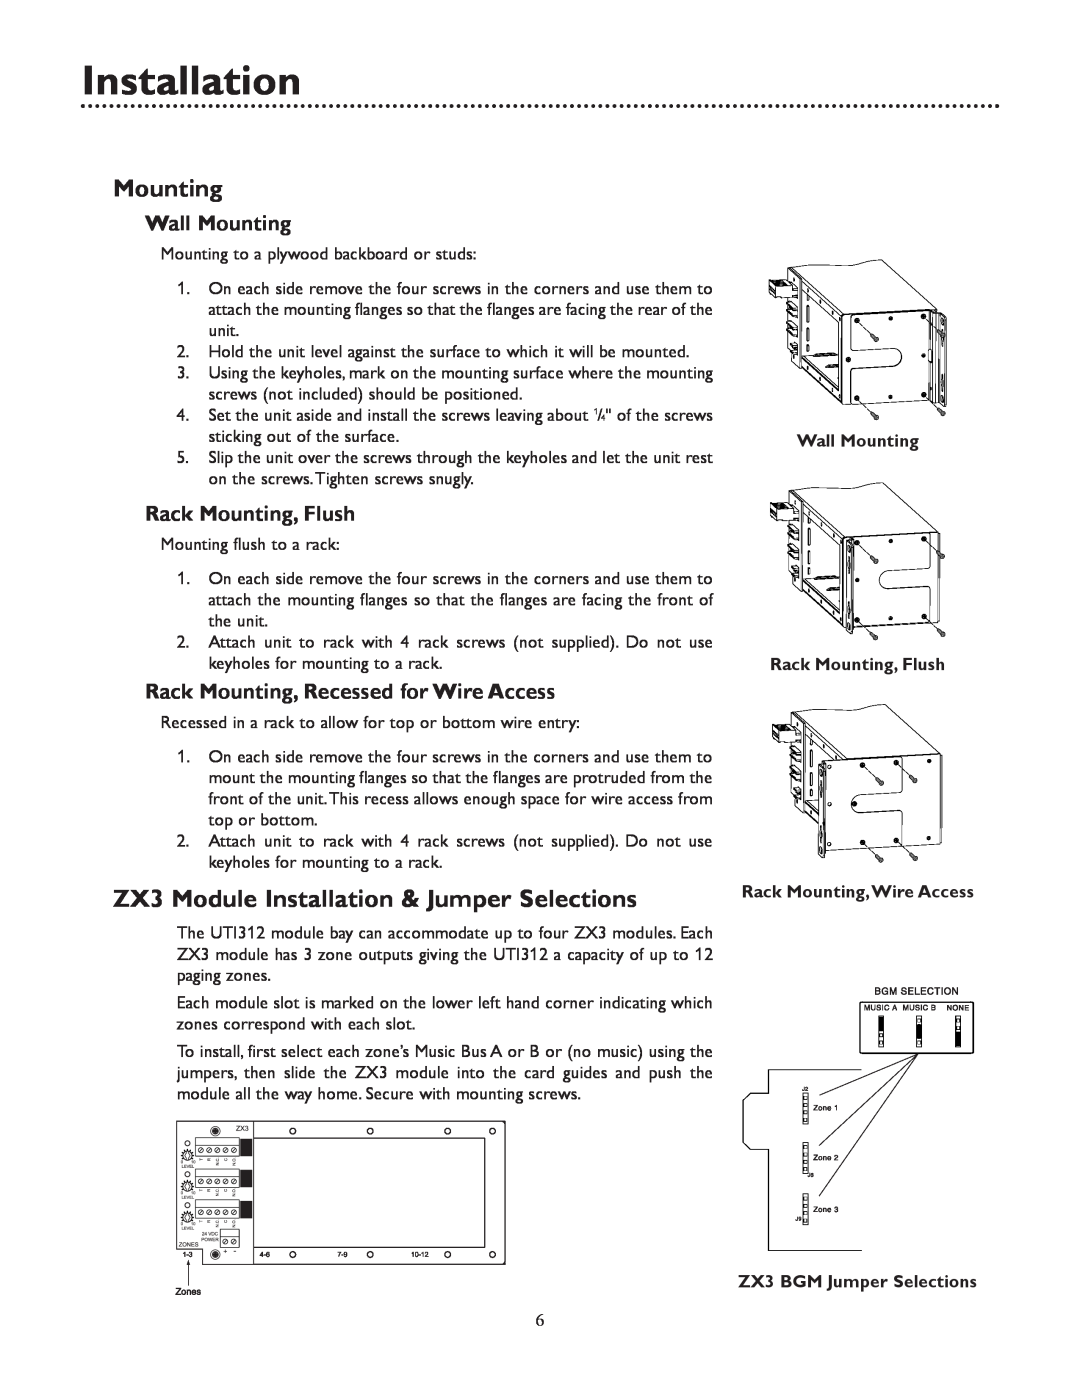 Bogen UTI312 specifications Installation, Wall Mounting, Rack Mounting, Flush, Rack Mounting, Recessed for Wire Access 